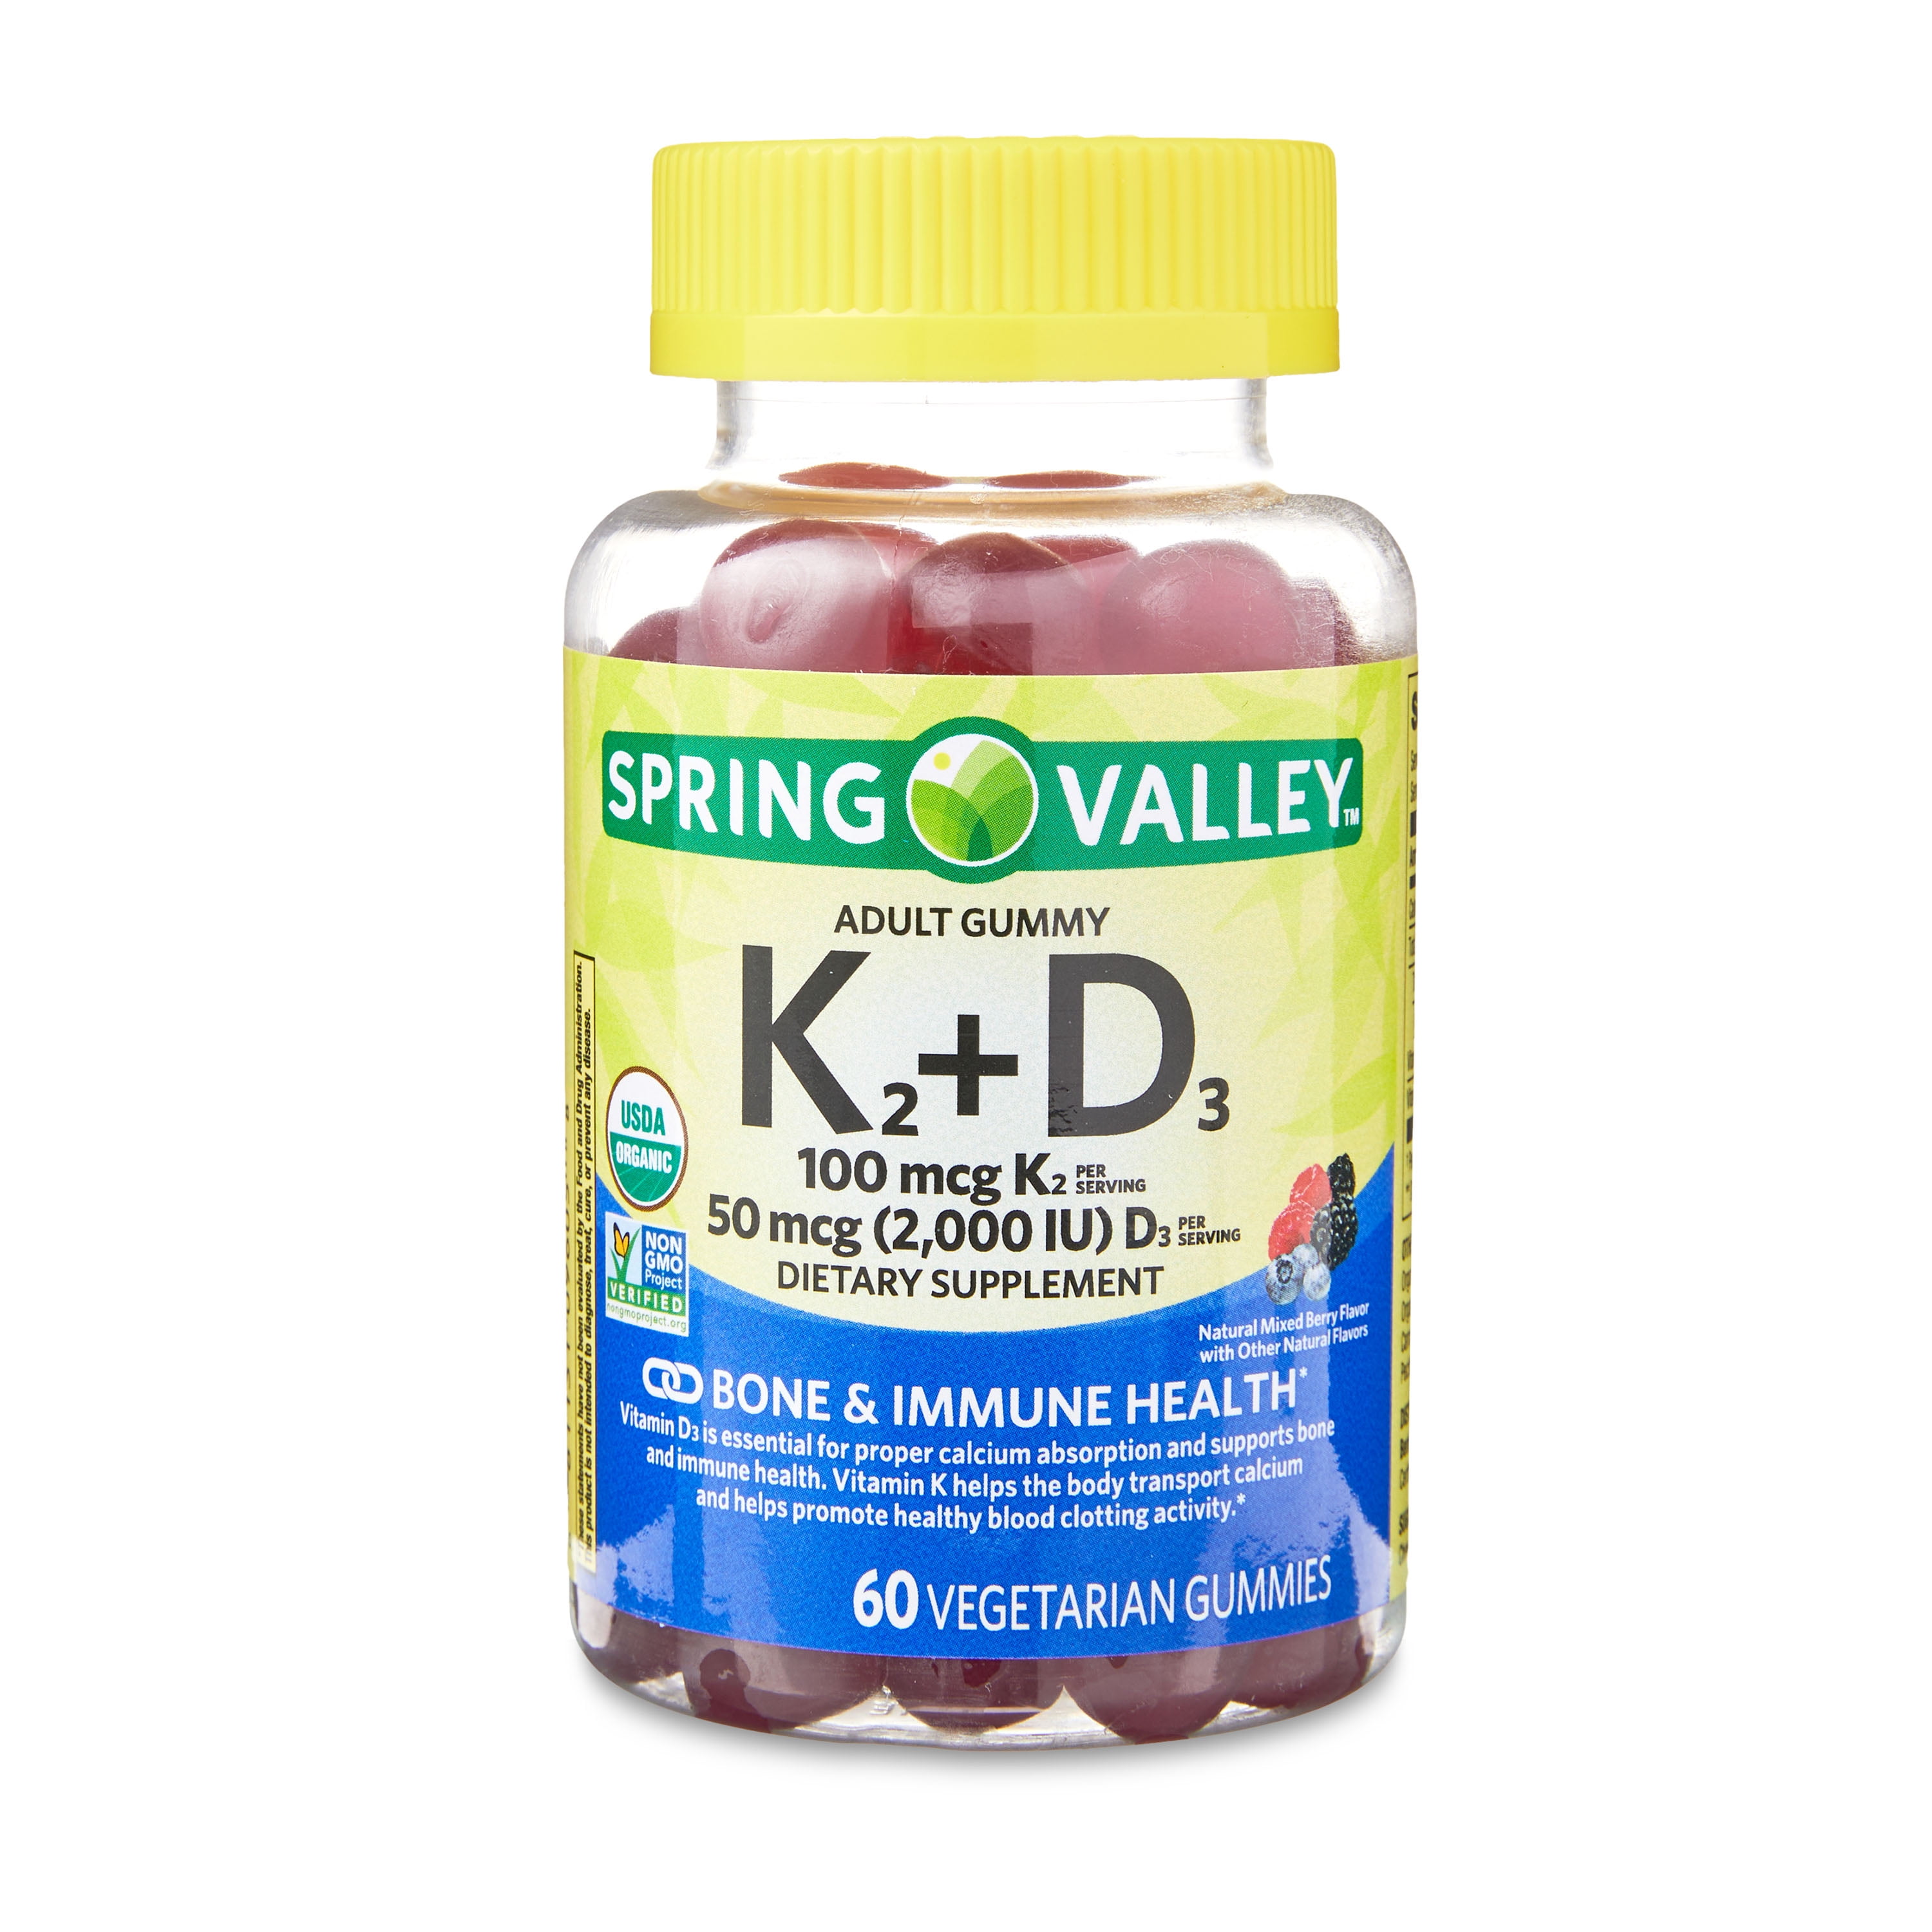 Spring Valley K2 + D3 Vegetarian Gummy Supplement for Bone and Immune Health, 60 Count